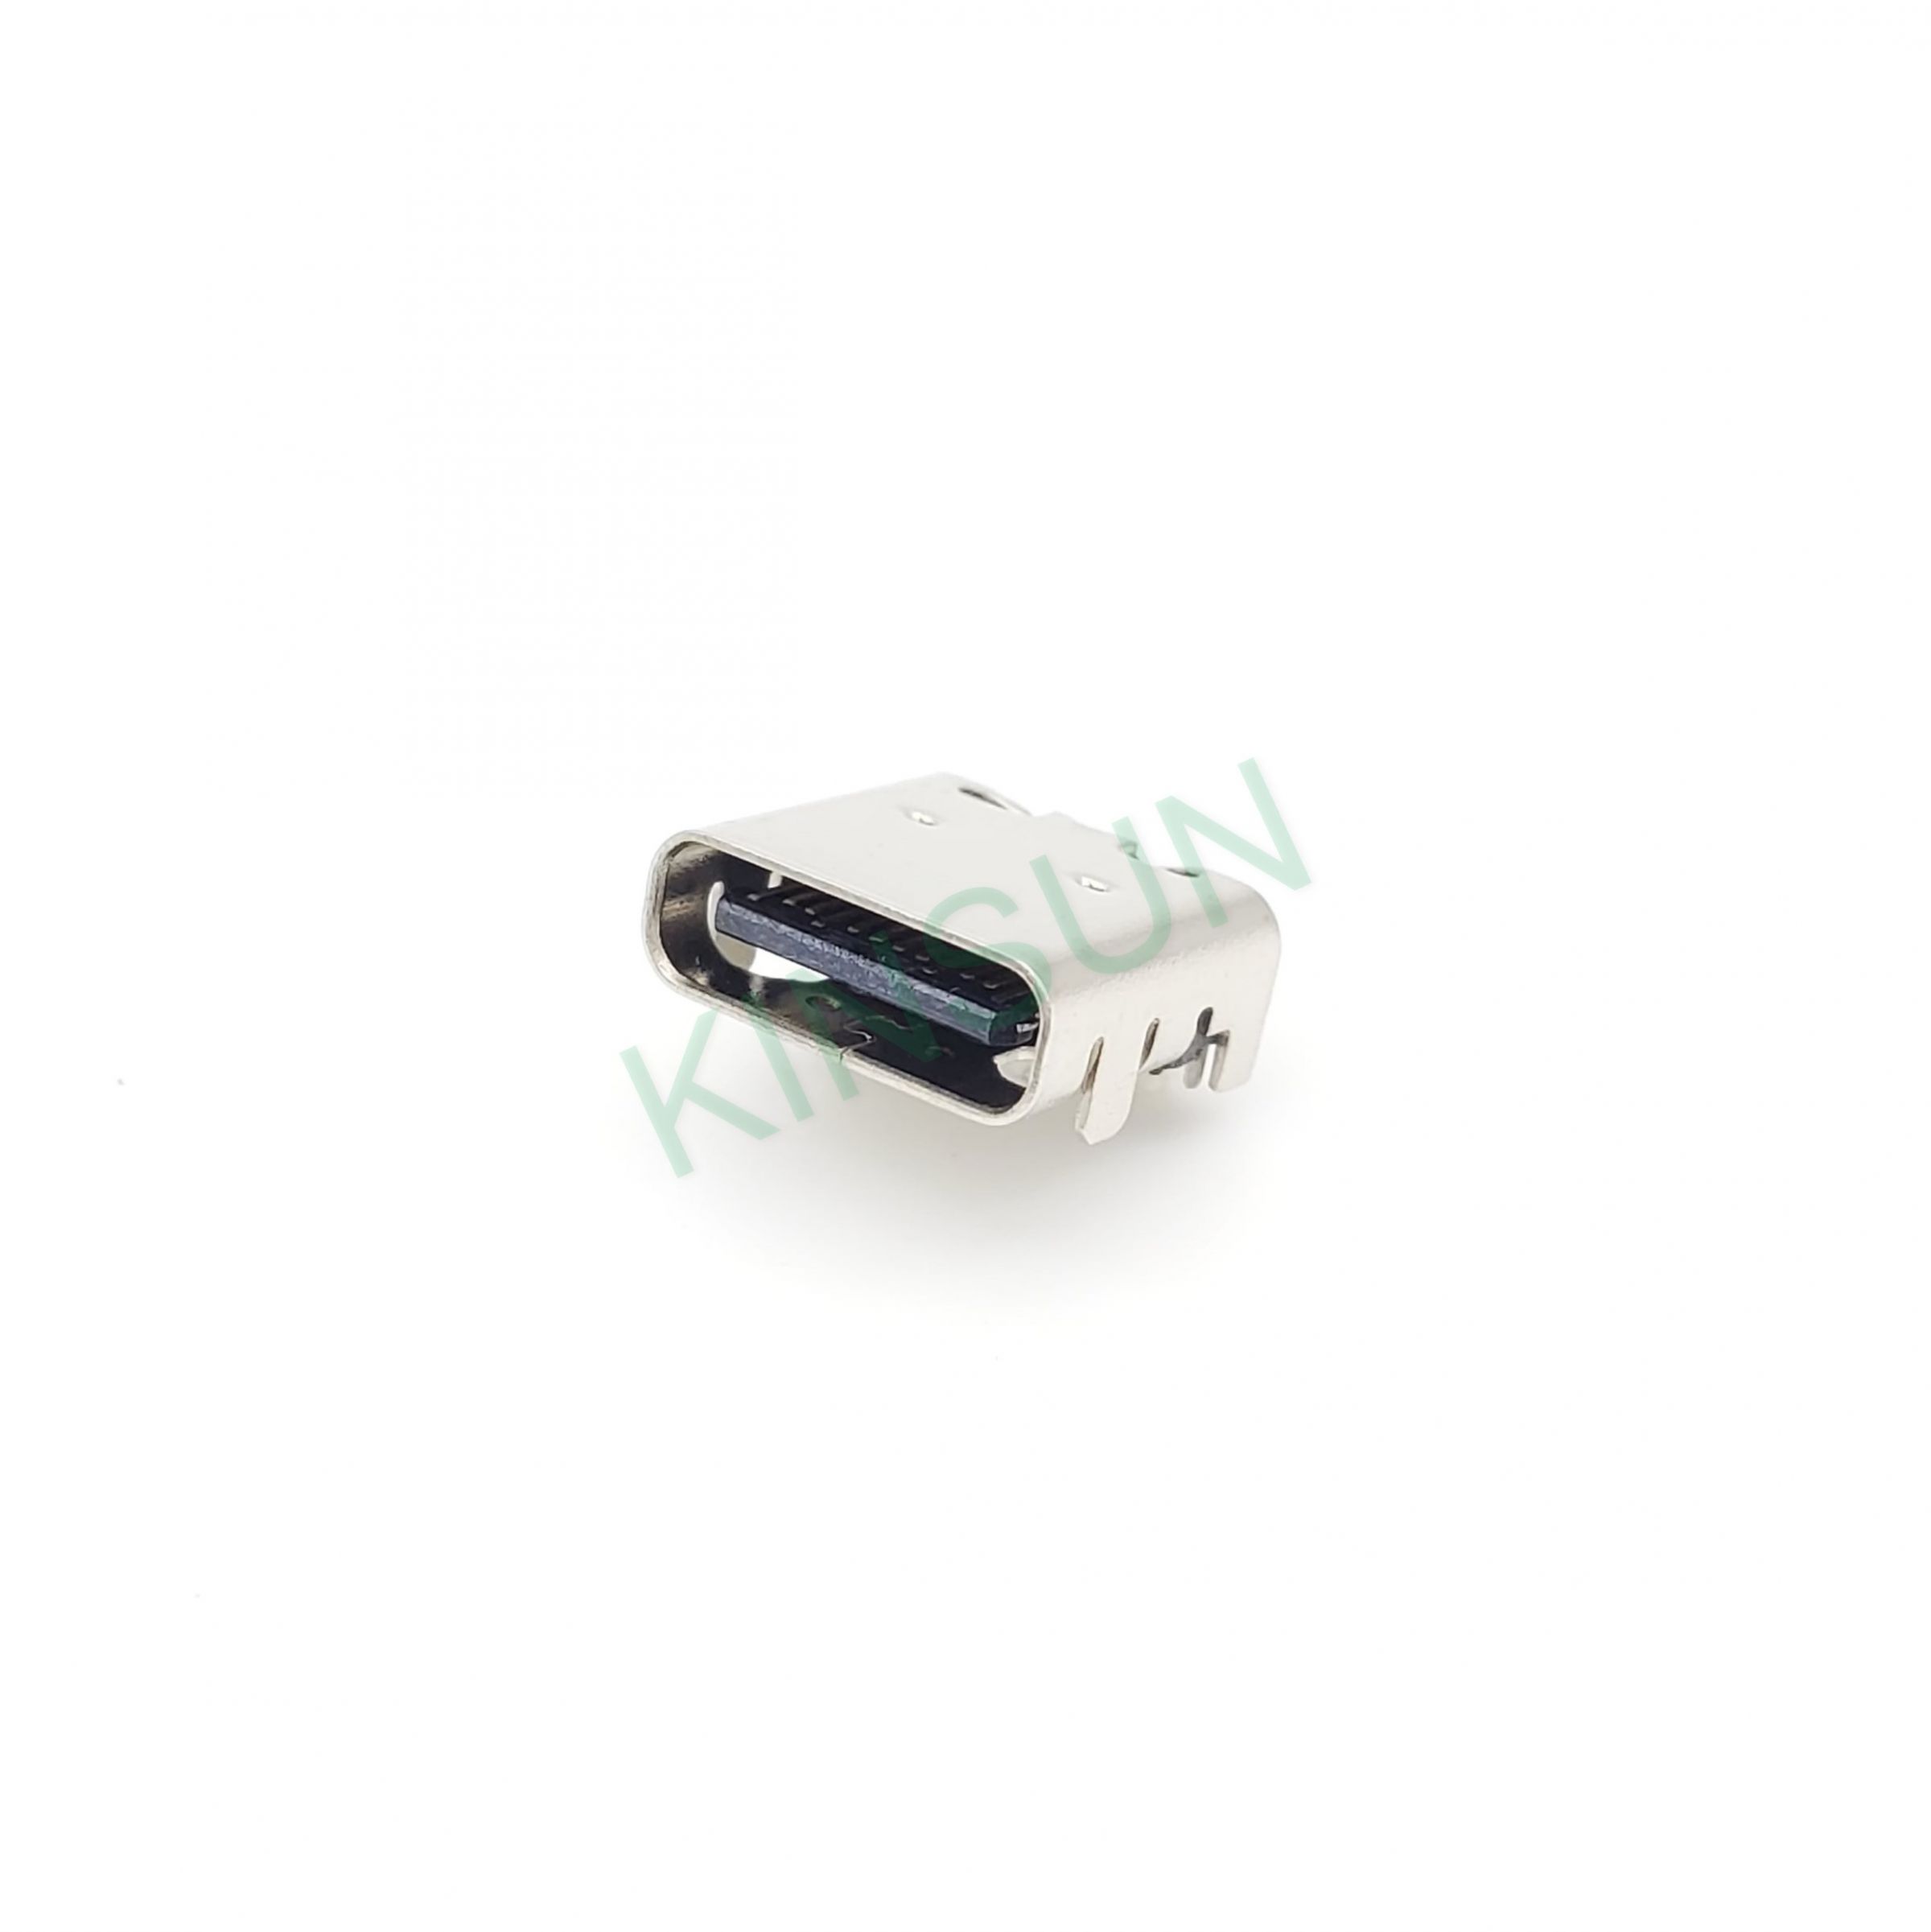 USB Type-C 3.0コネクタは、24ピンと16ピンのバージョンで利用可能です